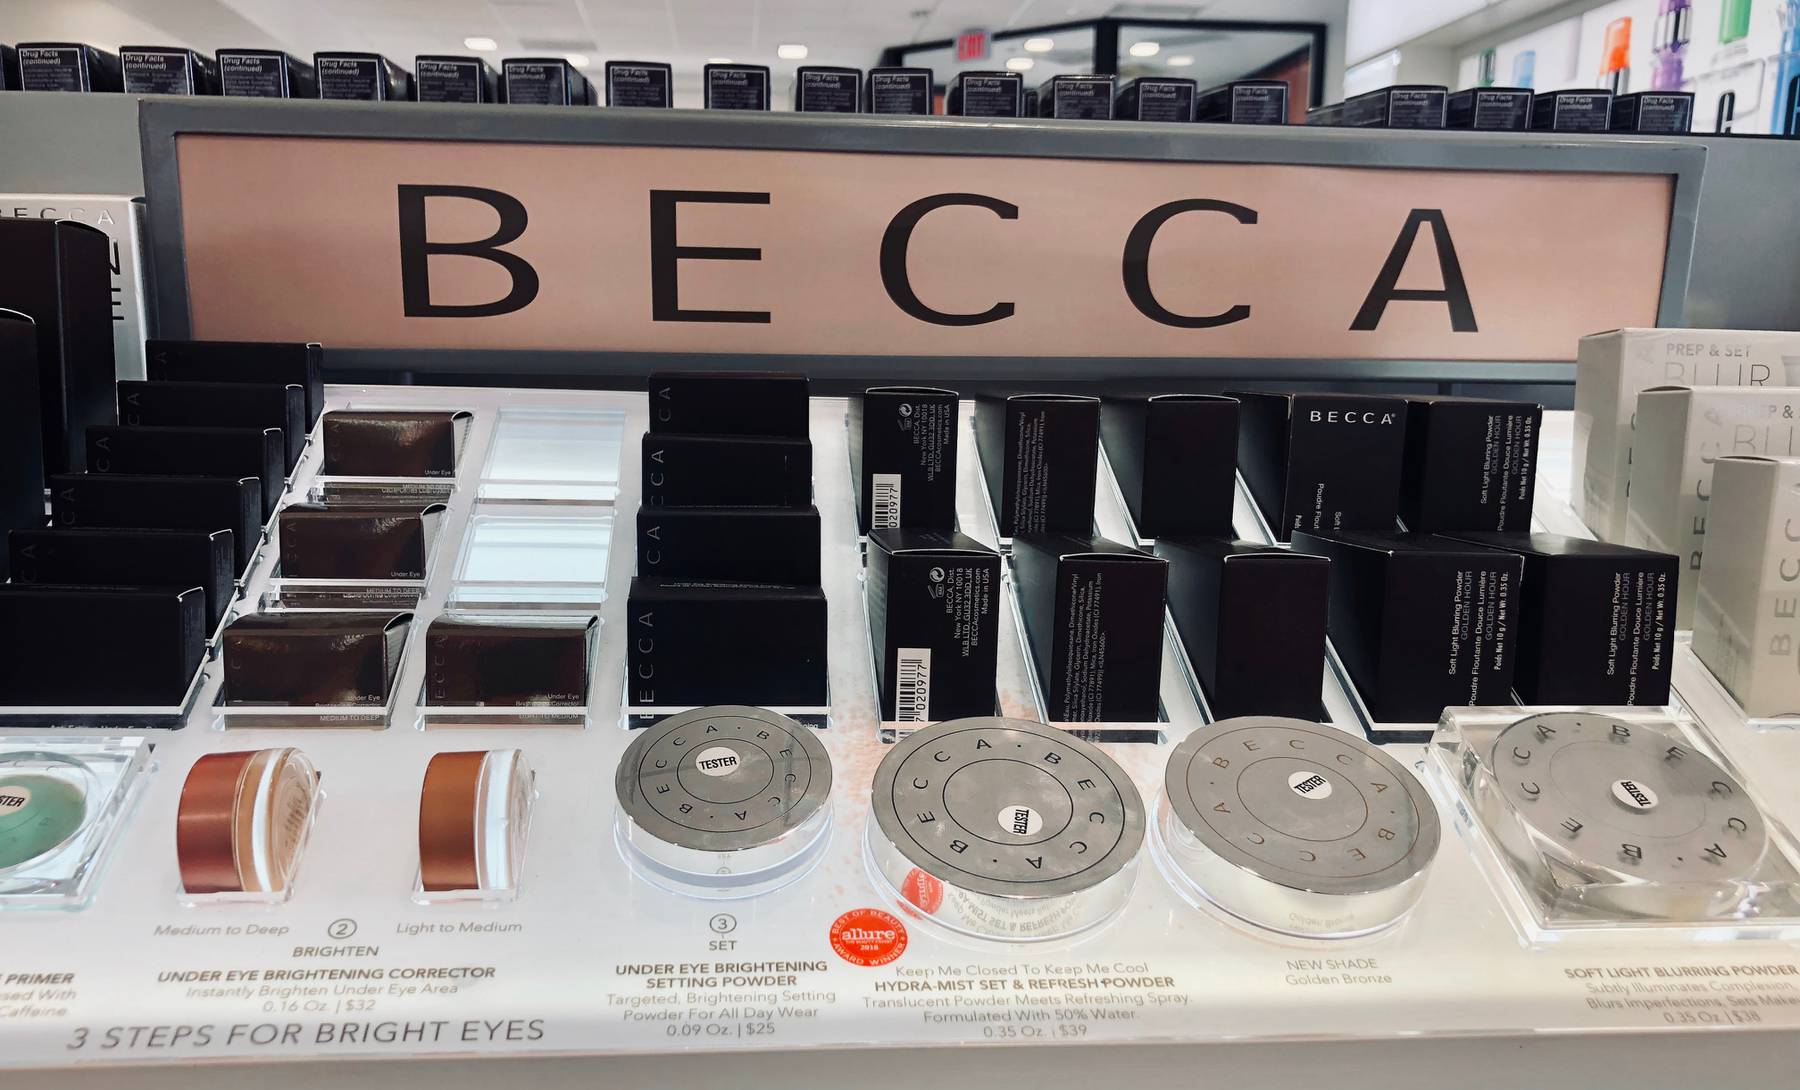 Becca Cosmetics brand display in 2019. Shutterstock